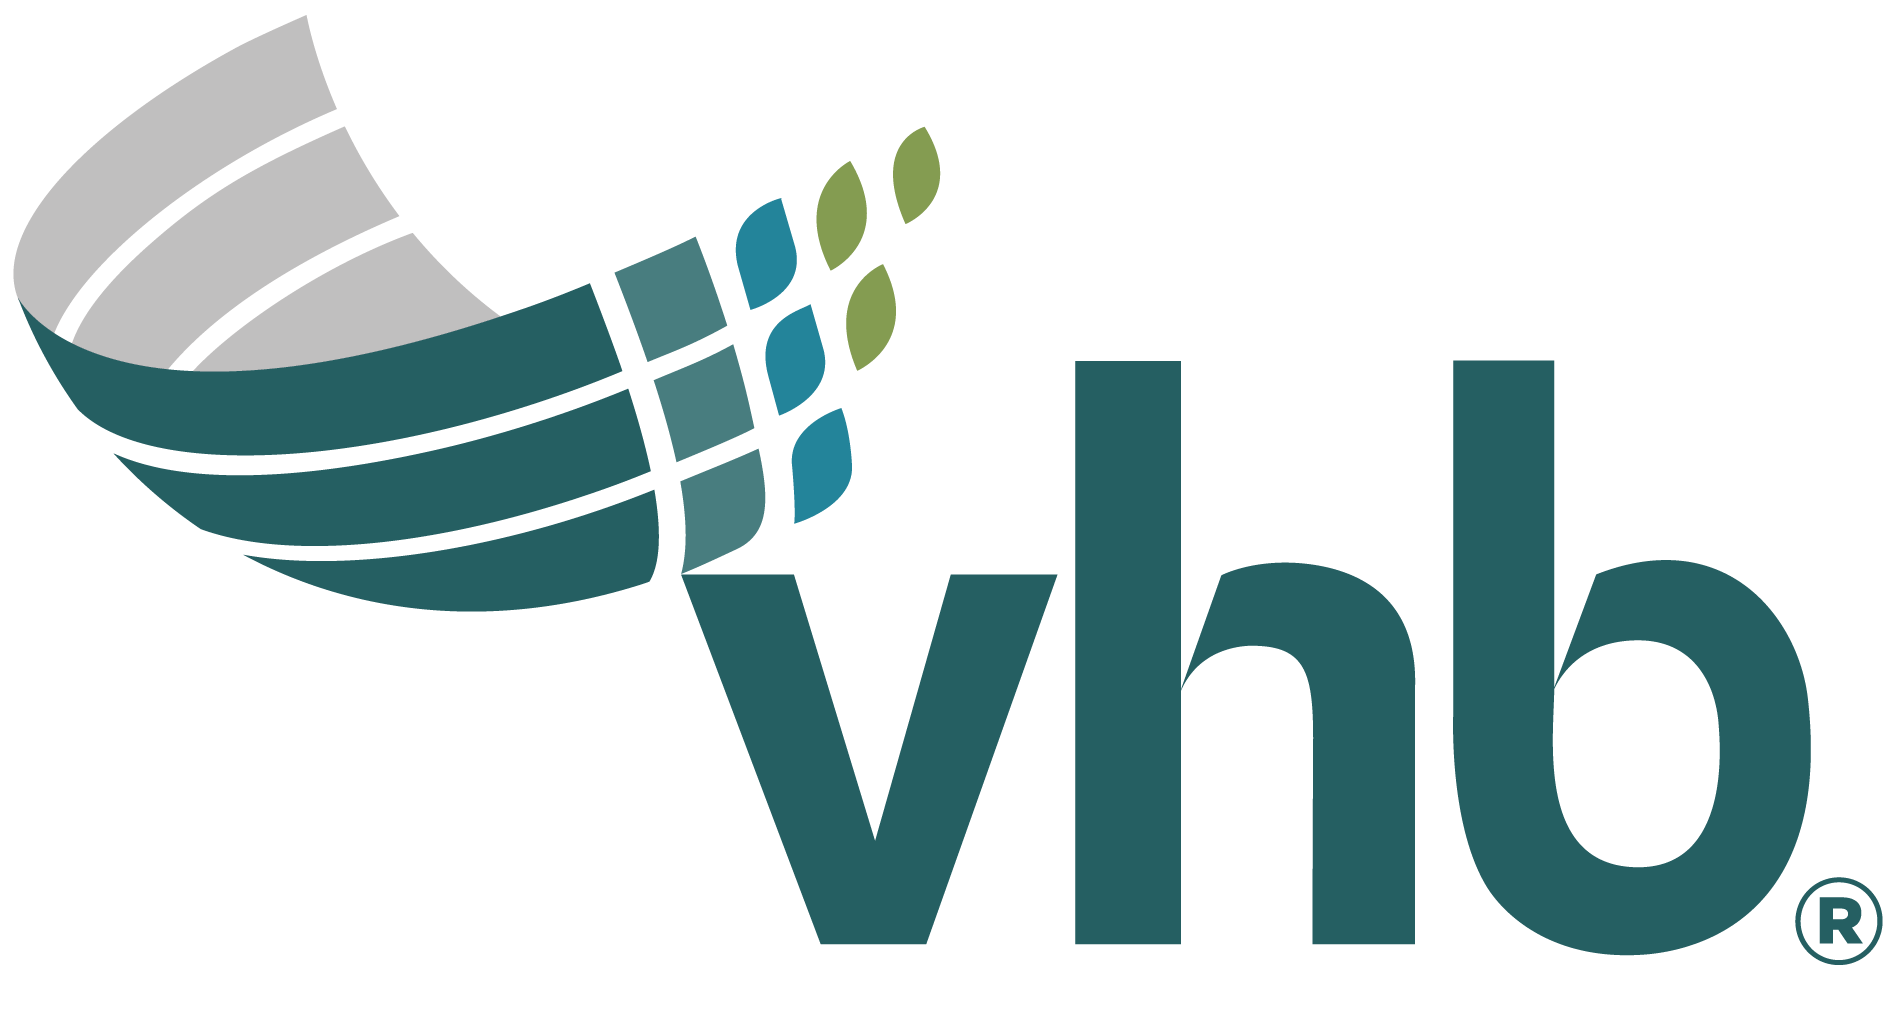 VHB Engineering, Surveying, Landscape Architecture and Geology, P.C. logo